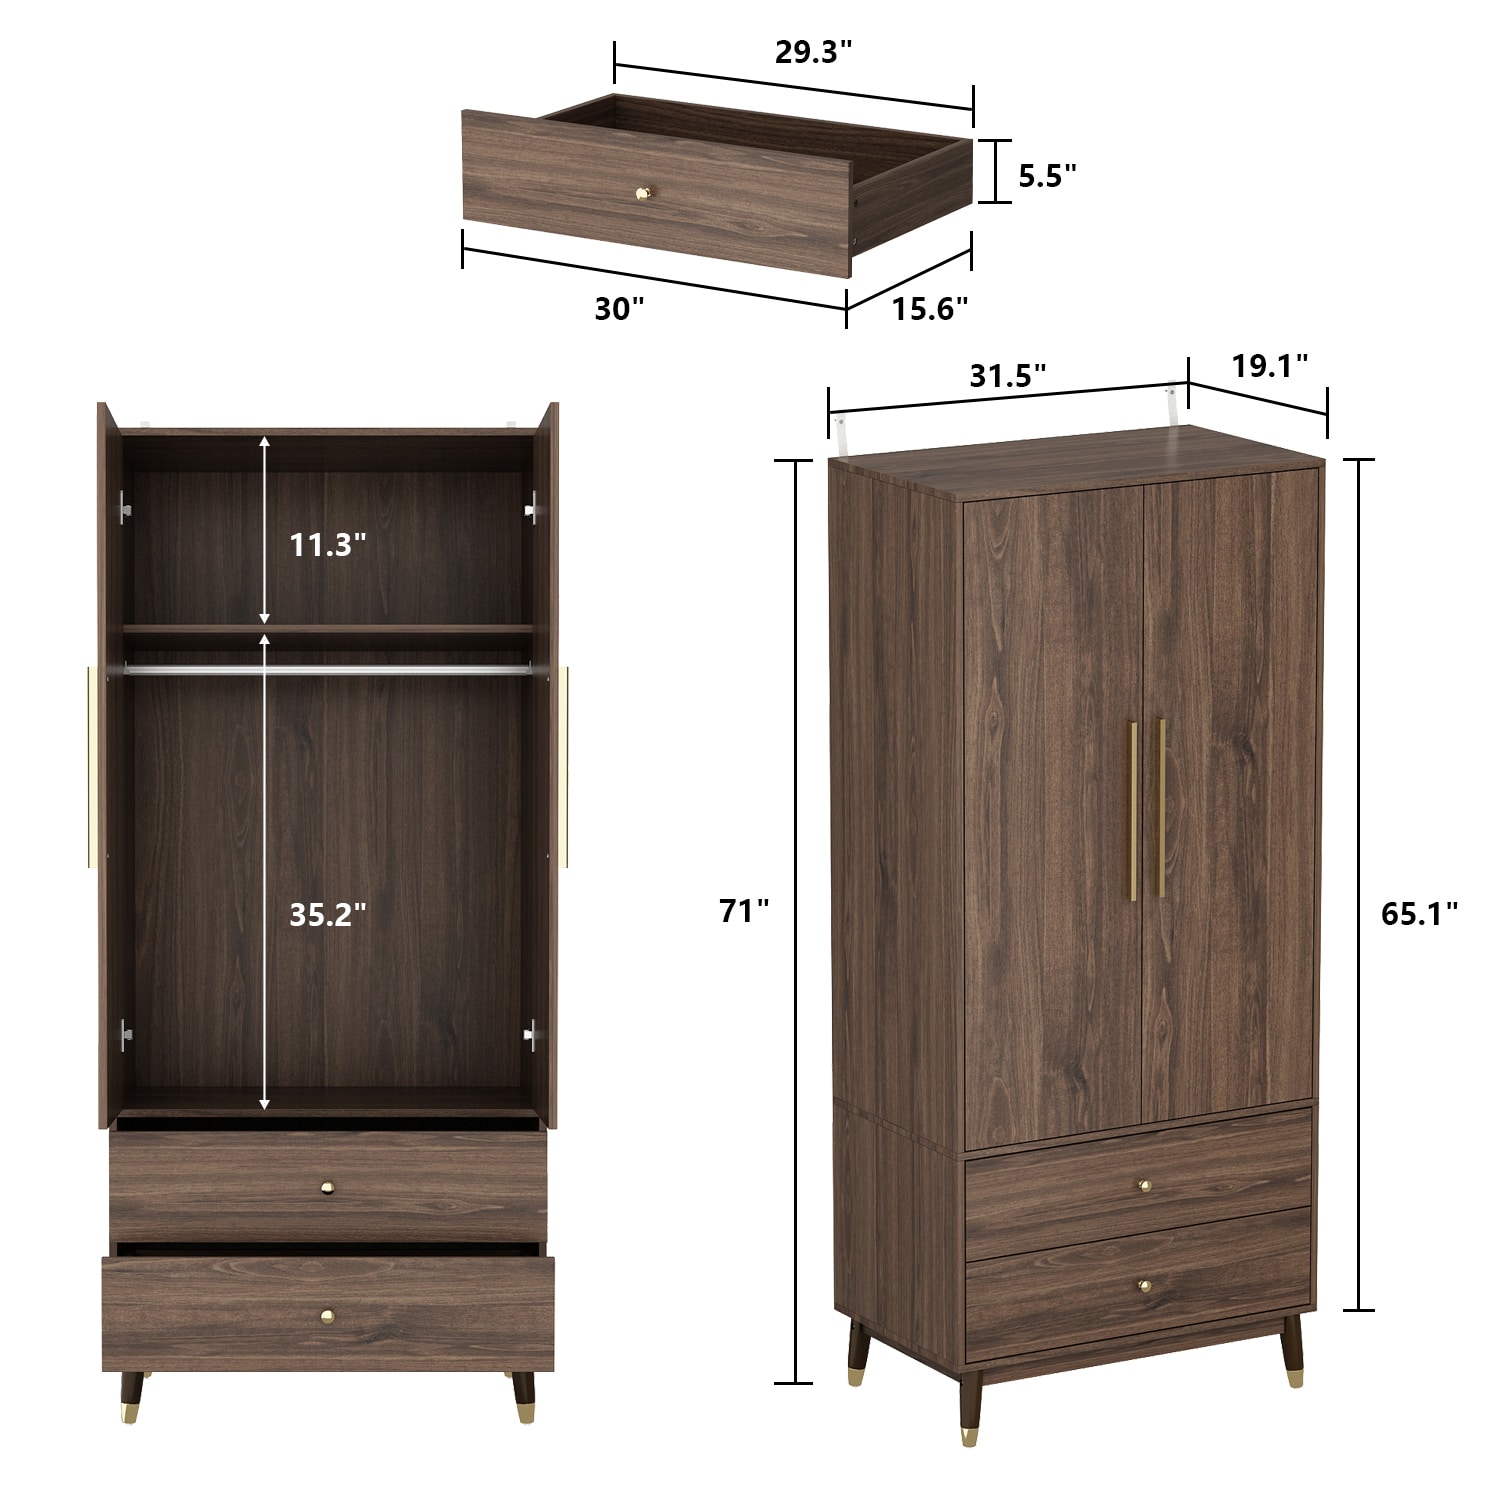 FUFU&GAGA Rustic Wardrobe Closet with Drawers and Full-Length Hanging ...